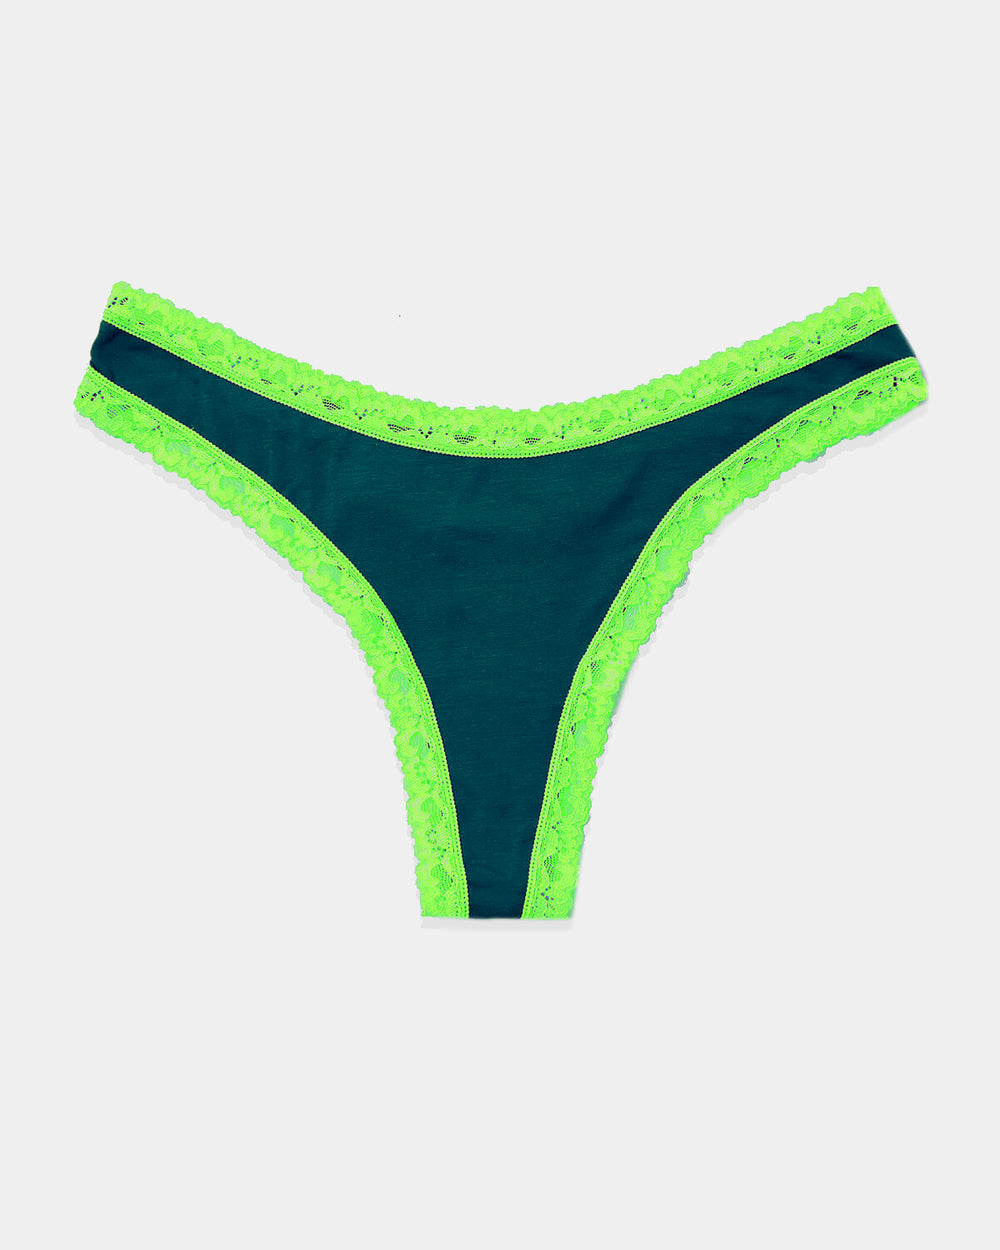 Erotissch Women Green Lace Low-Rise Thong Panty Briefs (M)